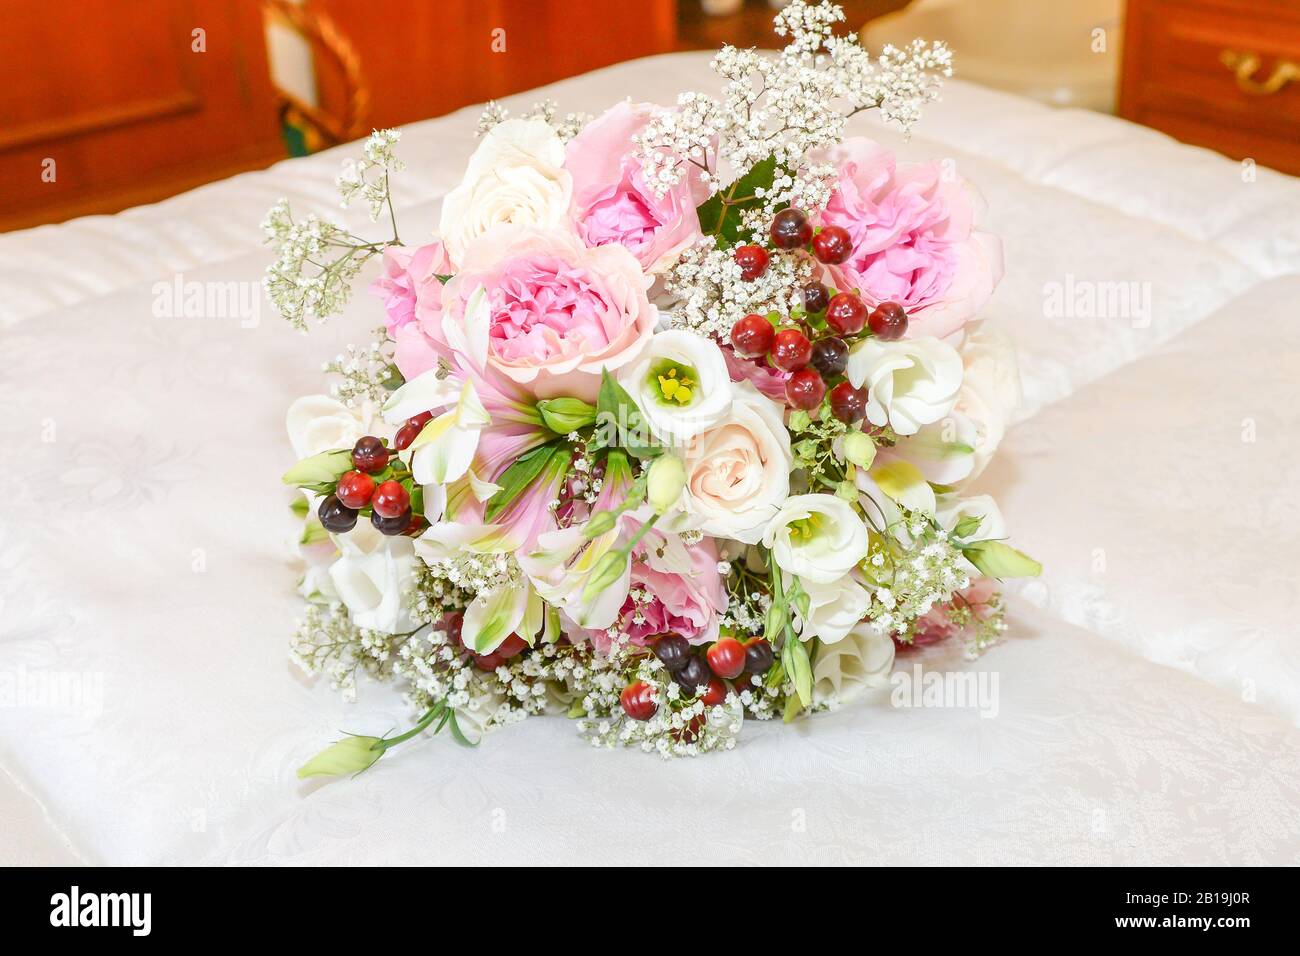 Bouquet of flowers with pink and white roses. Rose × damascena, Rose  Desdemona, Rose Lochinvar, lisianthus, eustoma Stock Photo - Alamy